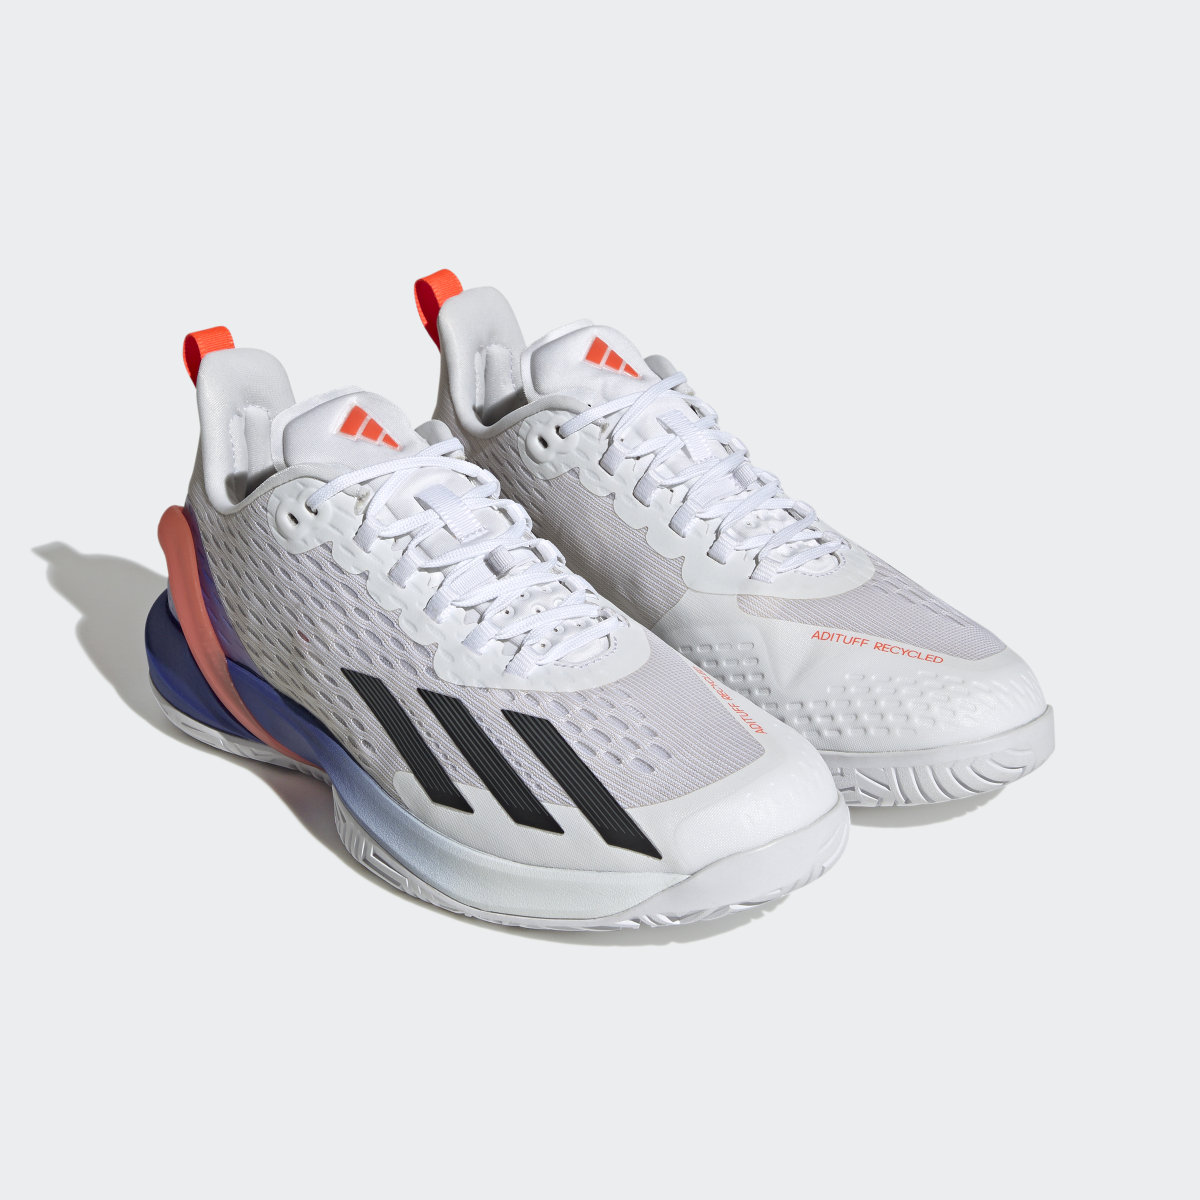 Adidas adizero Cybersonic Tenis Ayakkabısı. 12